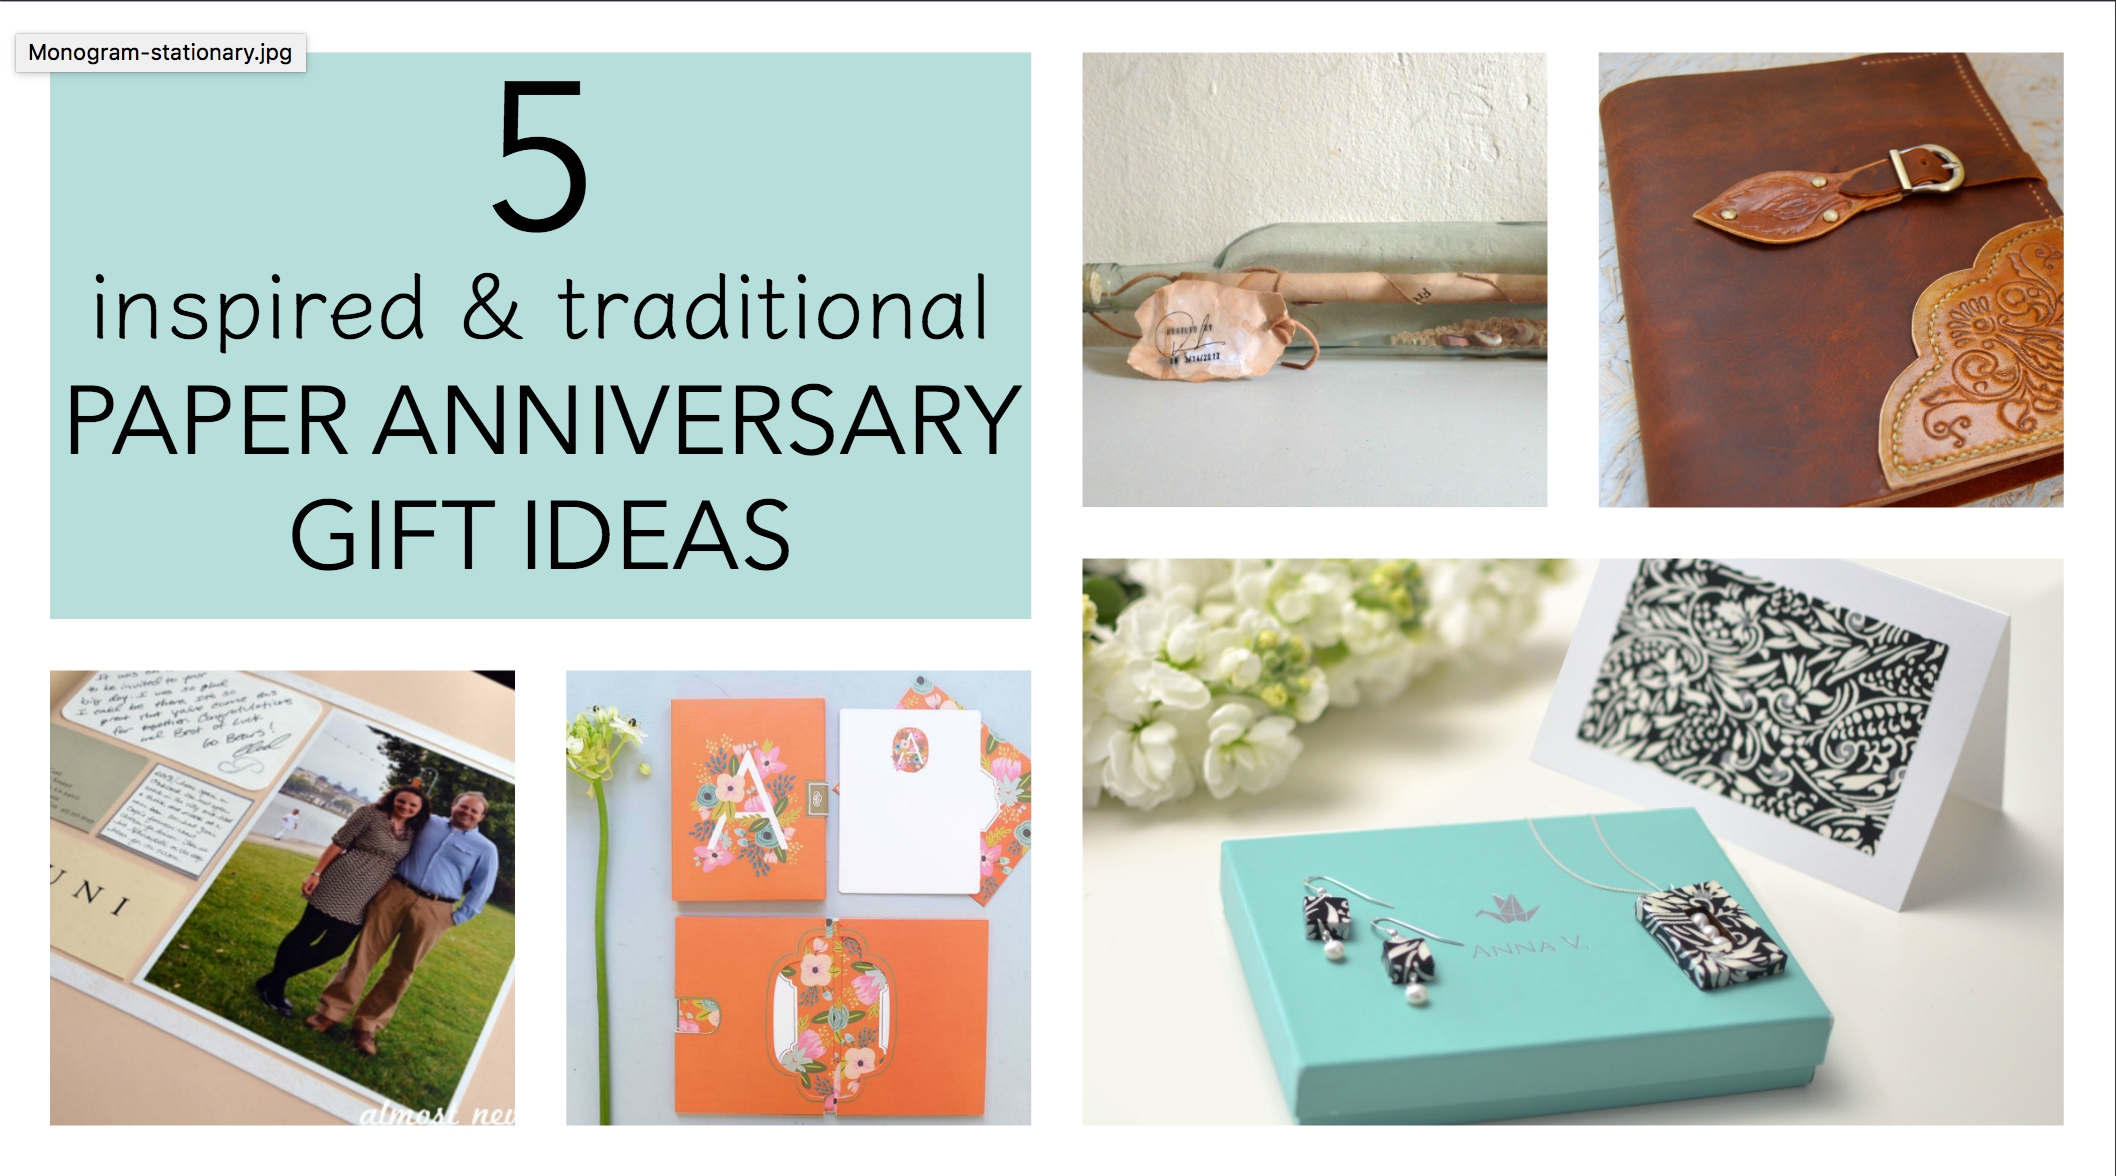 10 Lovely Wedding Anniversary Ideas For Her 5 traditional paper anniversary gift ideas for her paper 7 2022